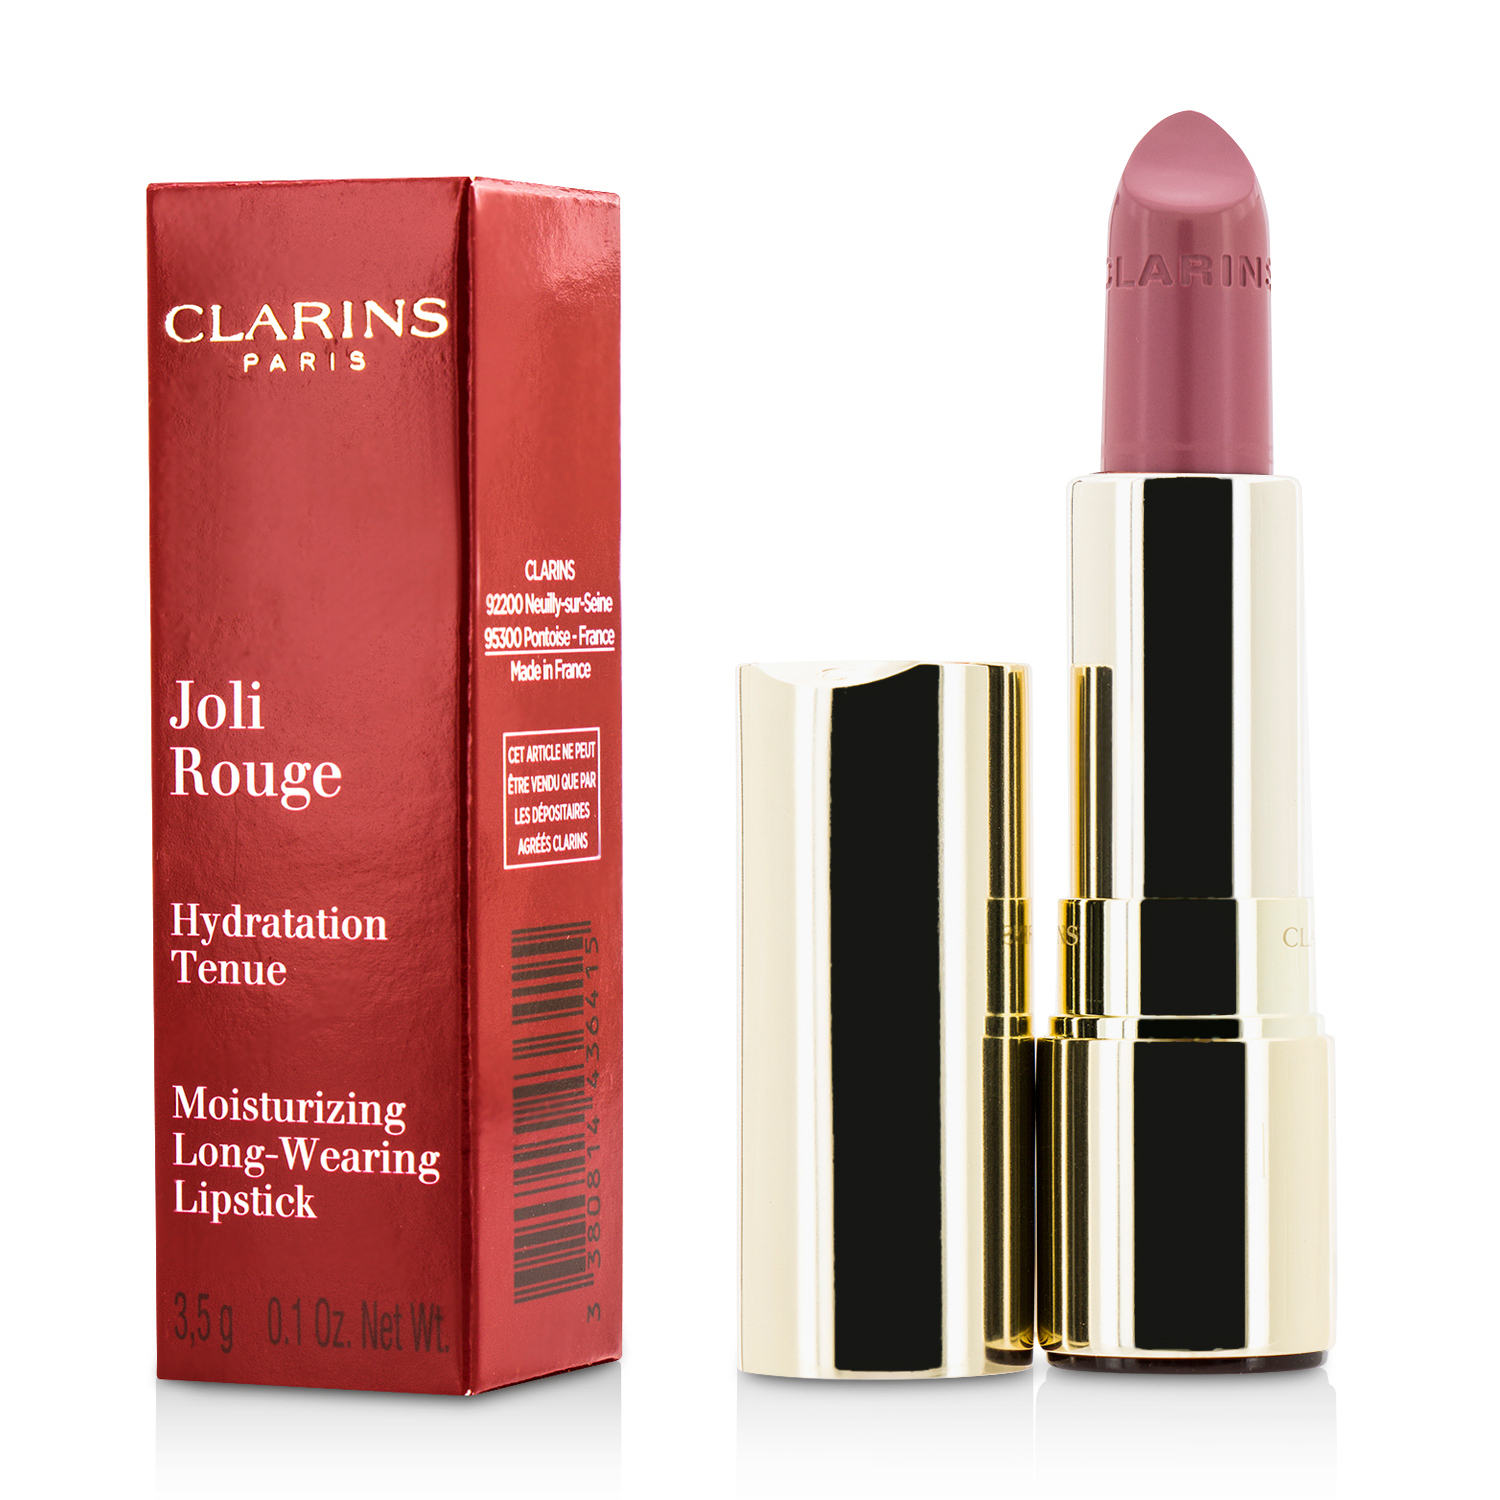 Joli Rouge (Long Wearing Moisturizing Lipstick) - # 750 Lilac Pink Clarins Image